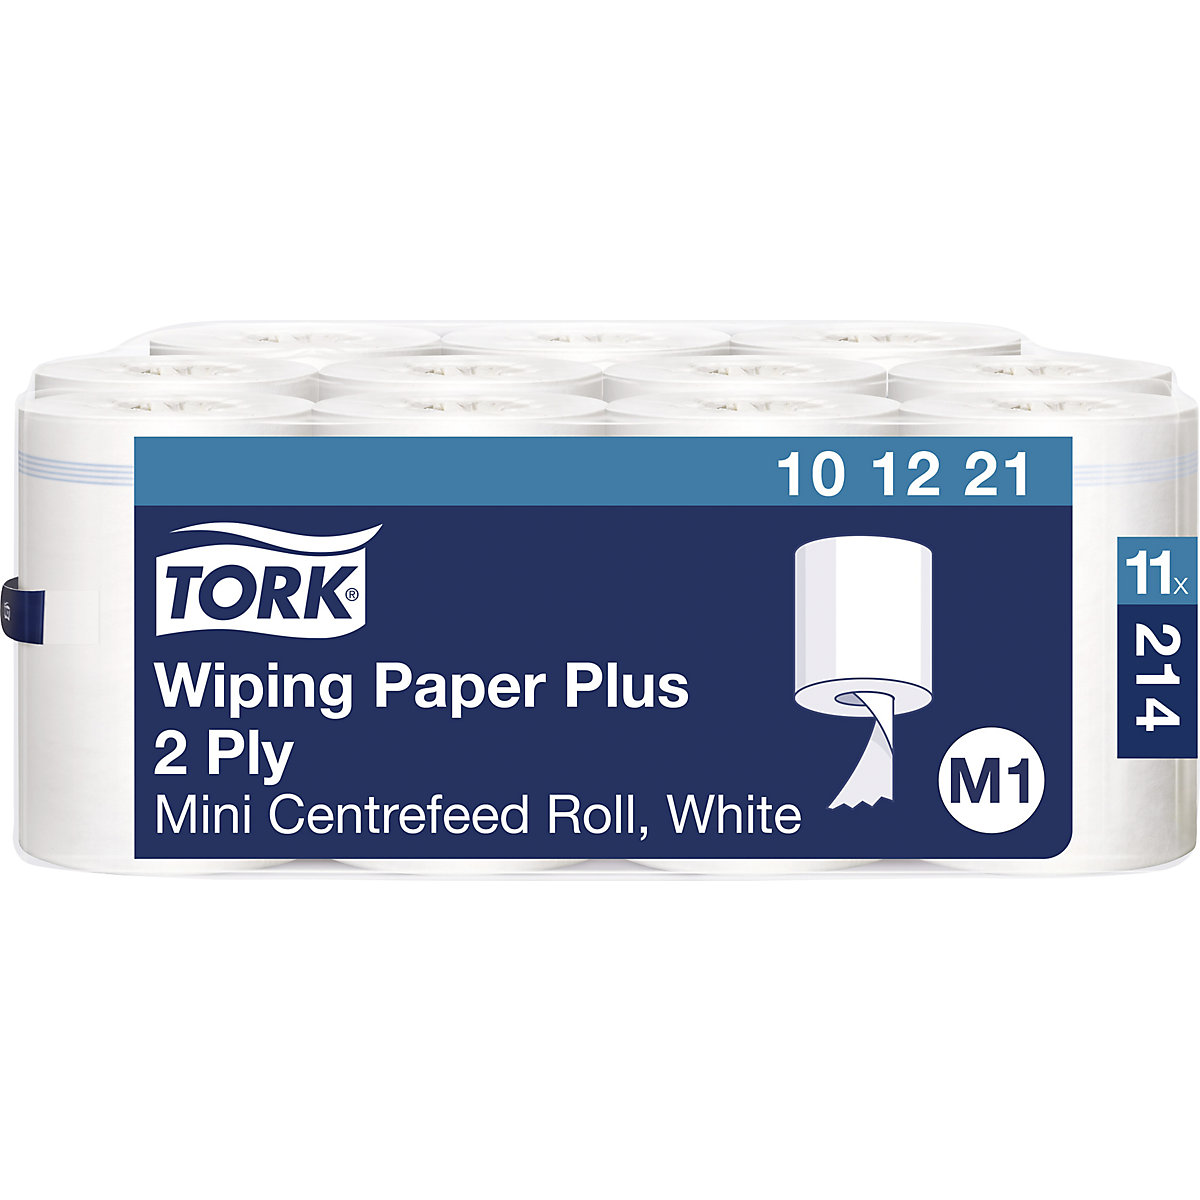 Strong multi-purpose mini centrefeed paper wipes - TORK